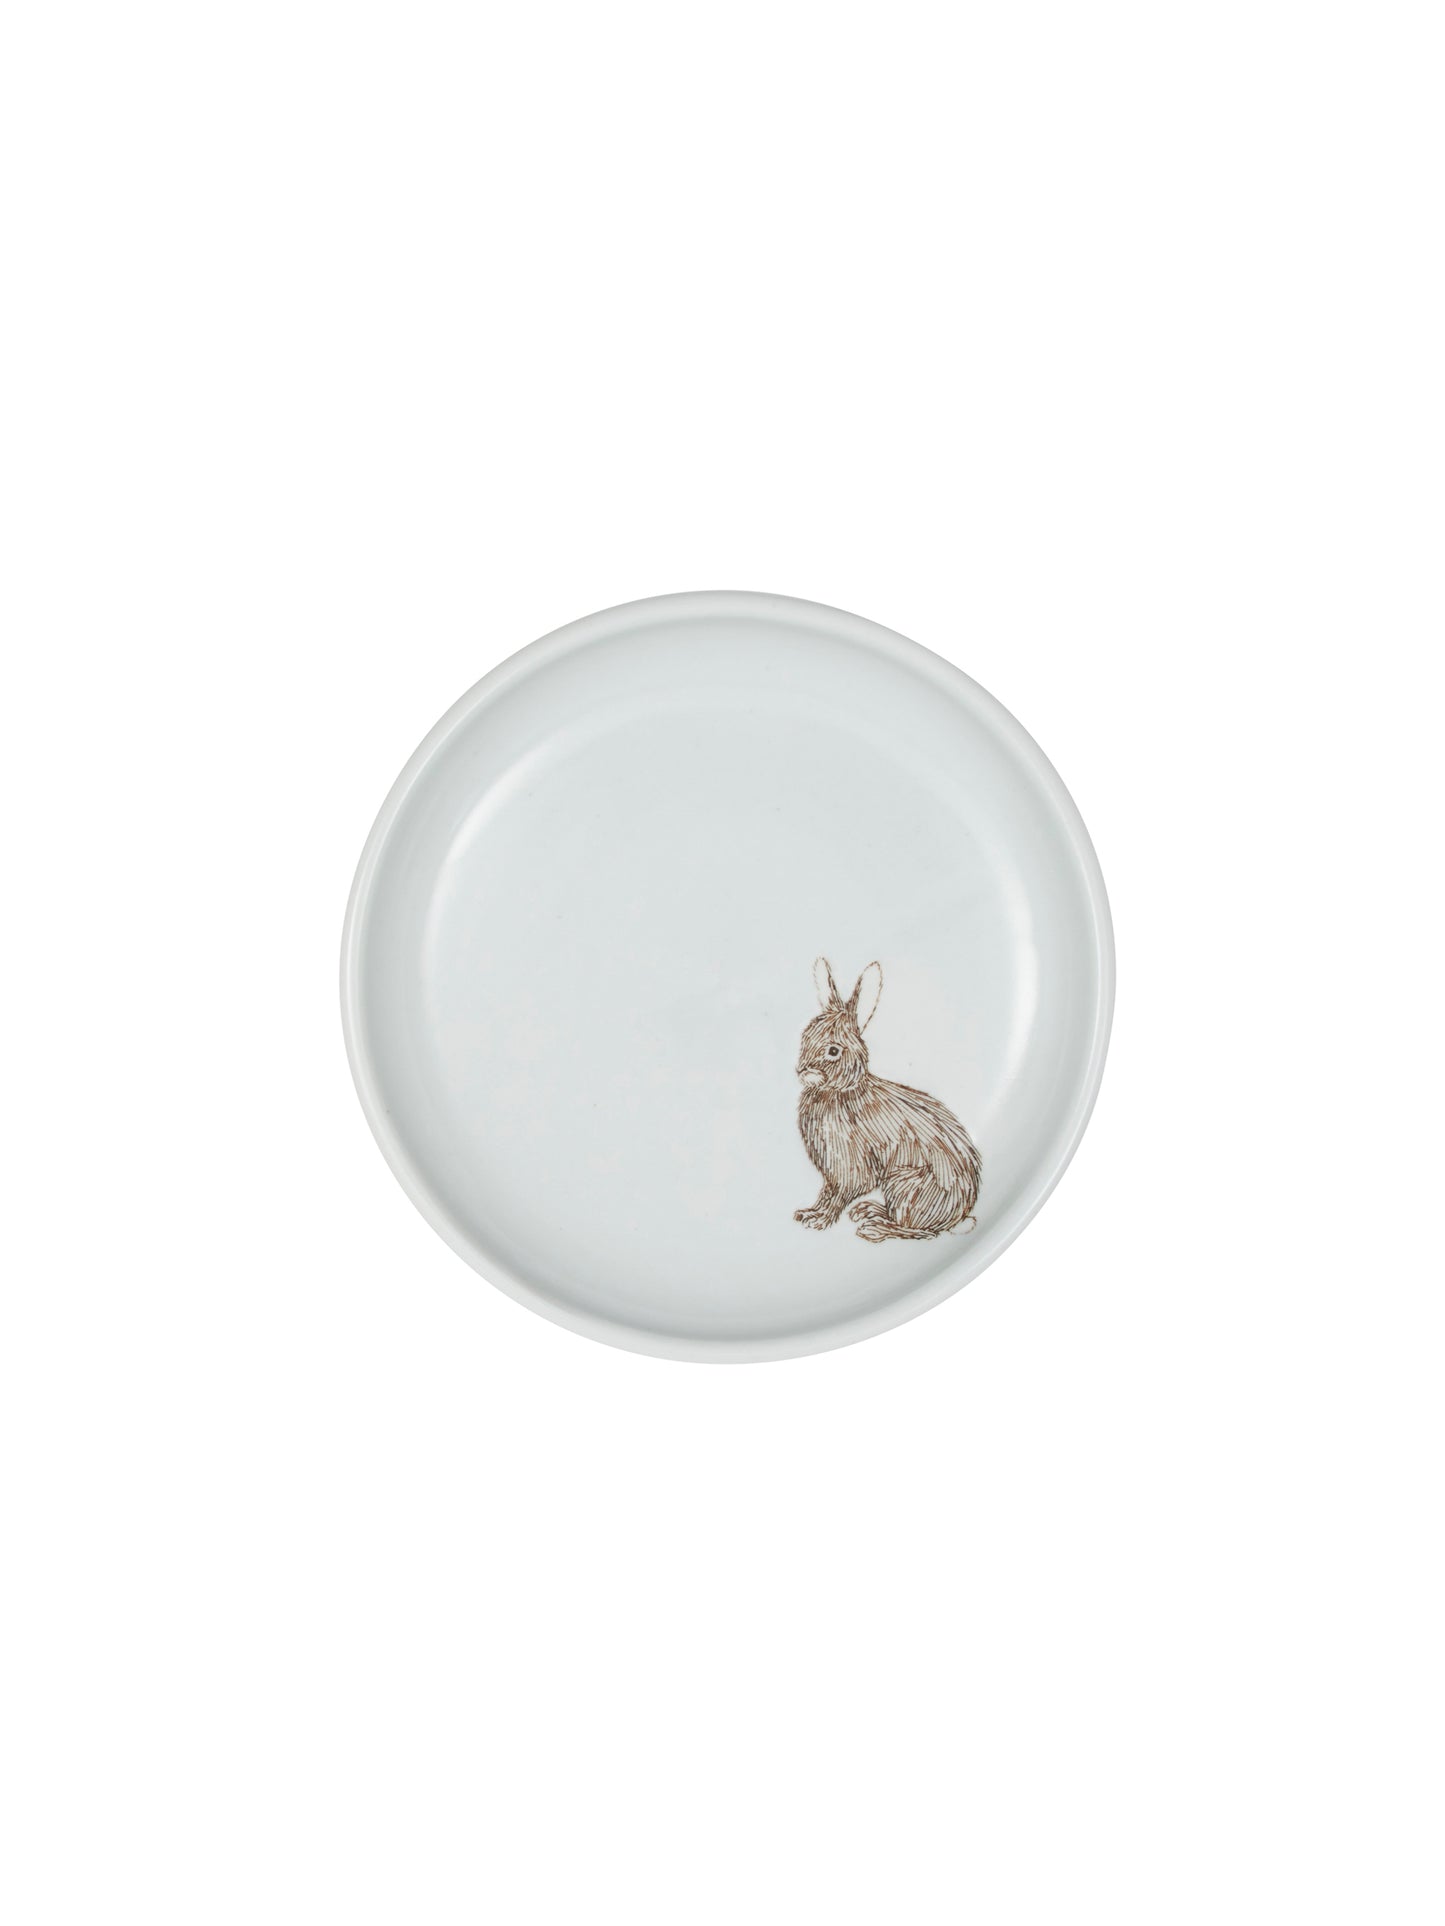 Rabbit Ceramic Plate 8" Weston Table